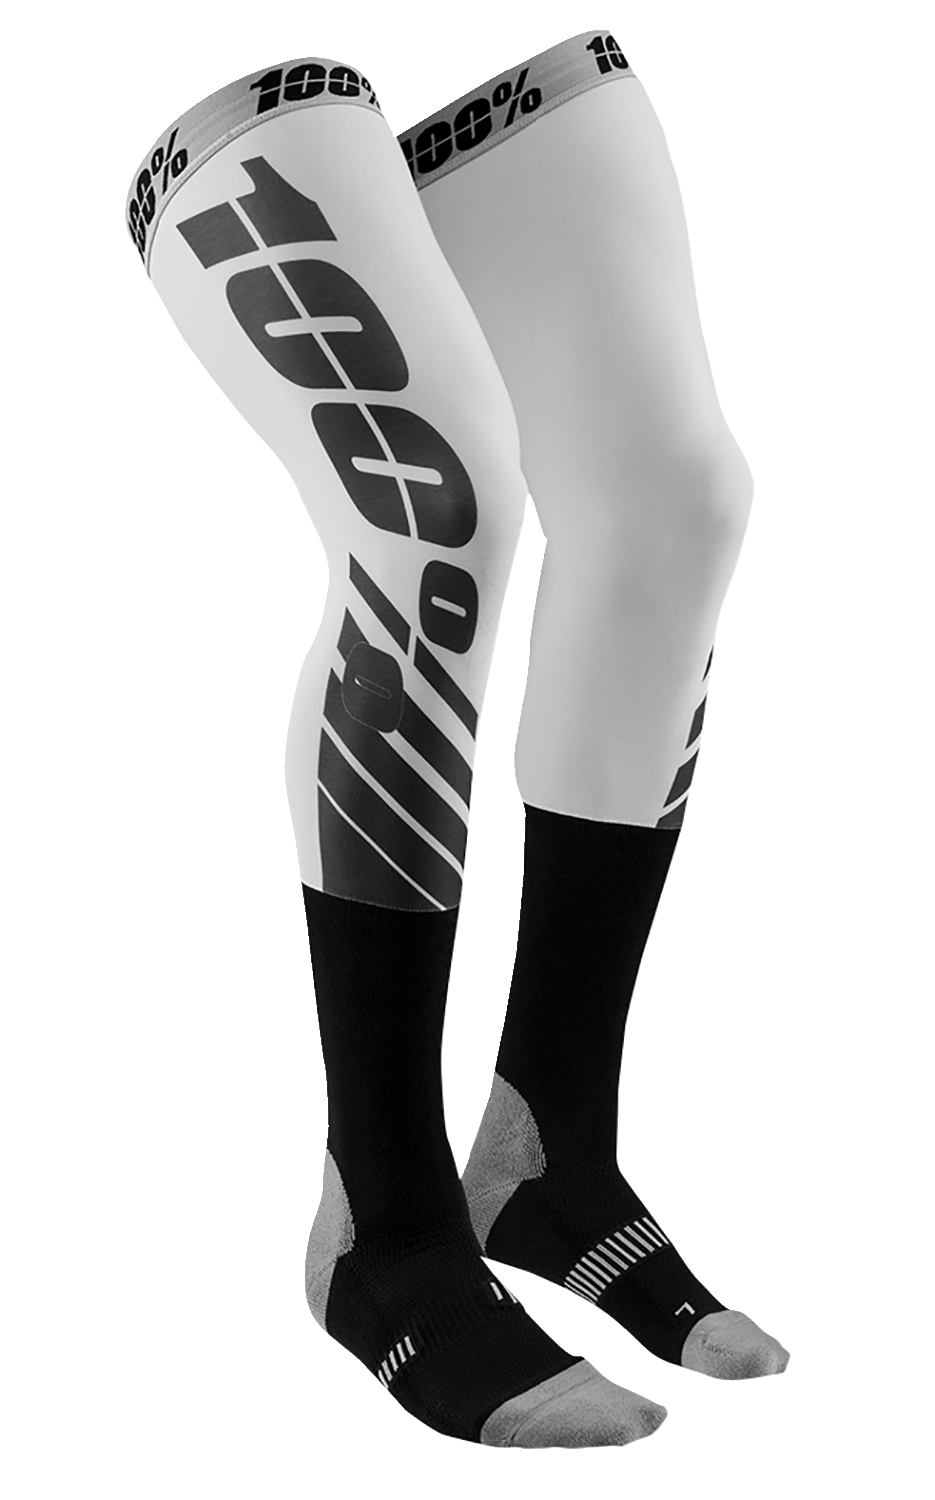 100% REV Knee Brace Performance Moto Socks - Small/Medium 20052-00005